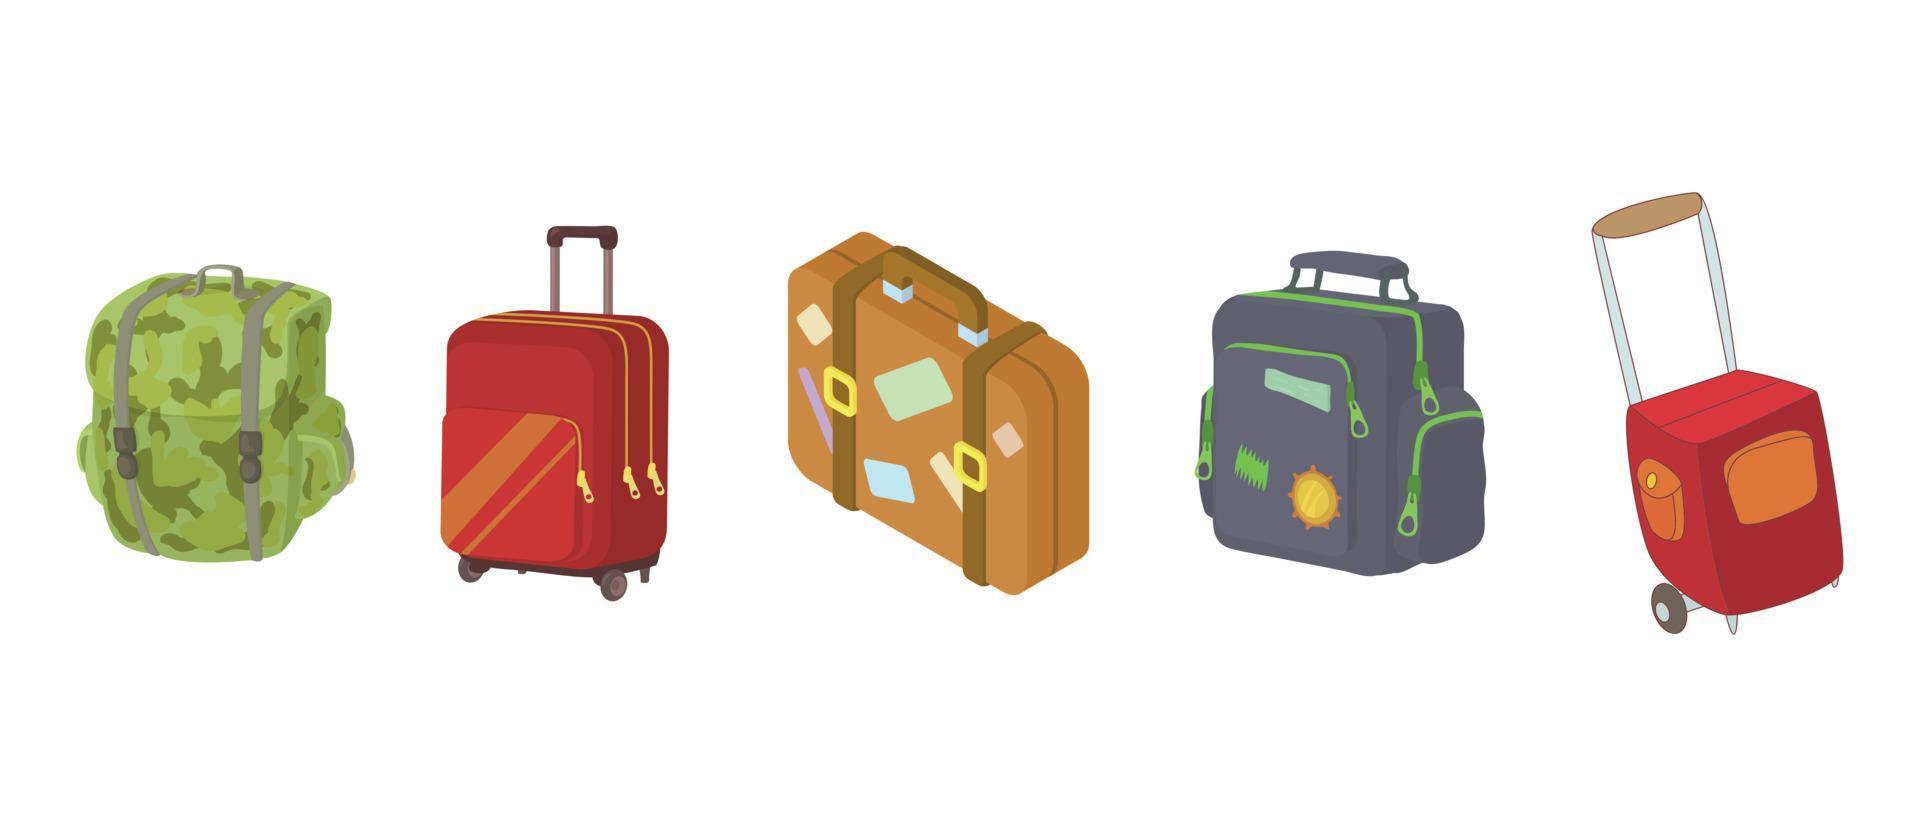 Travel bag icon set, cartoon style vector